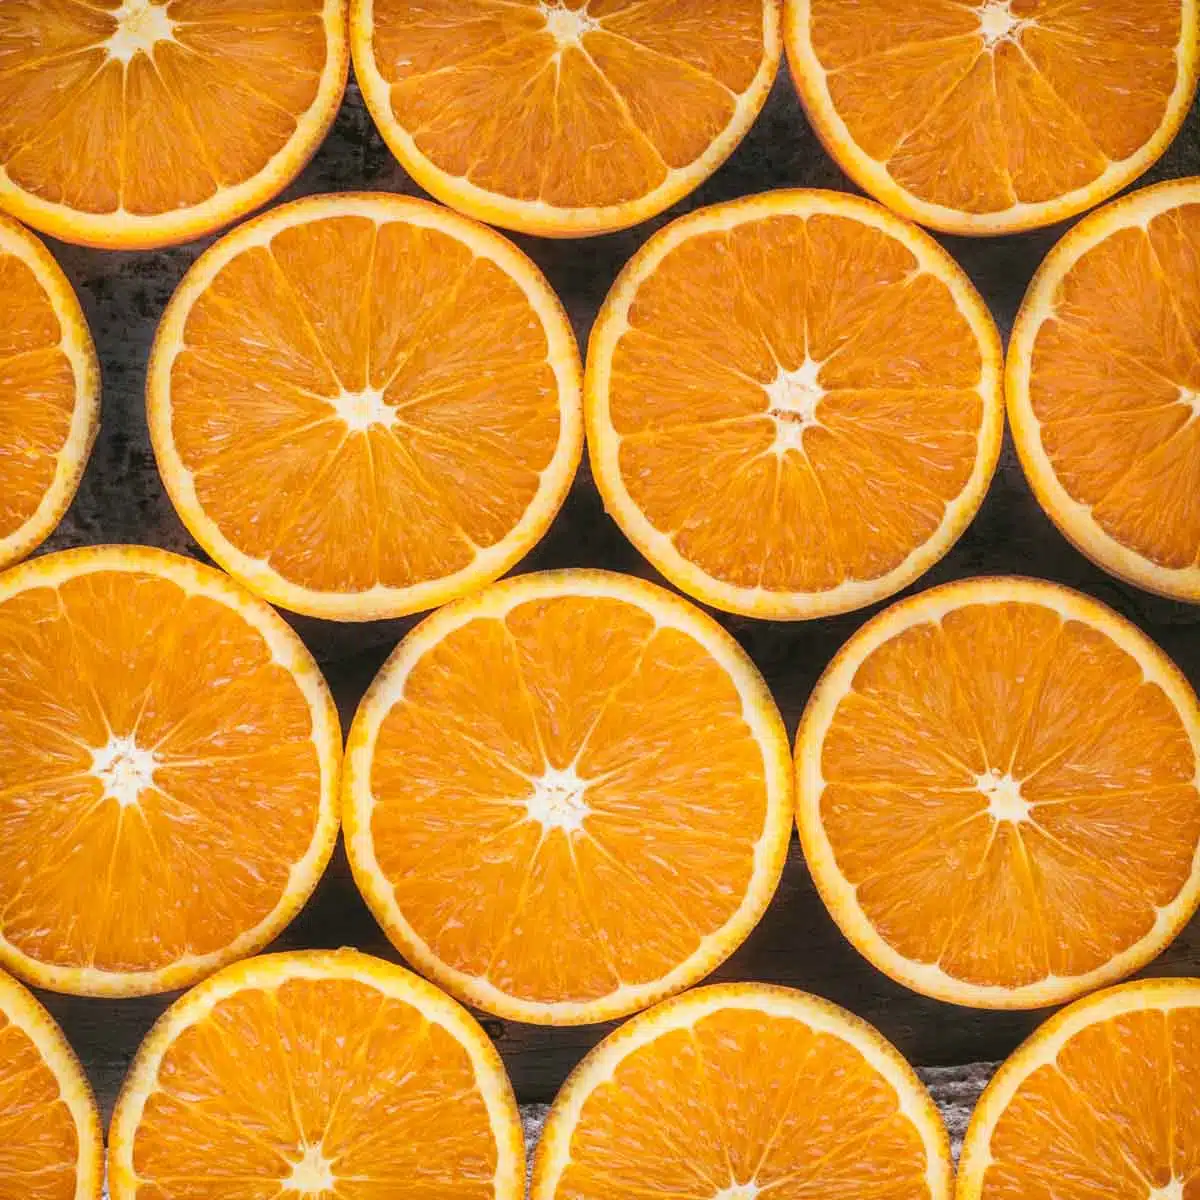 Cut oranges on a platter.